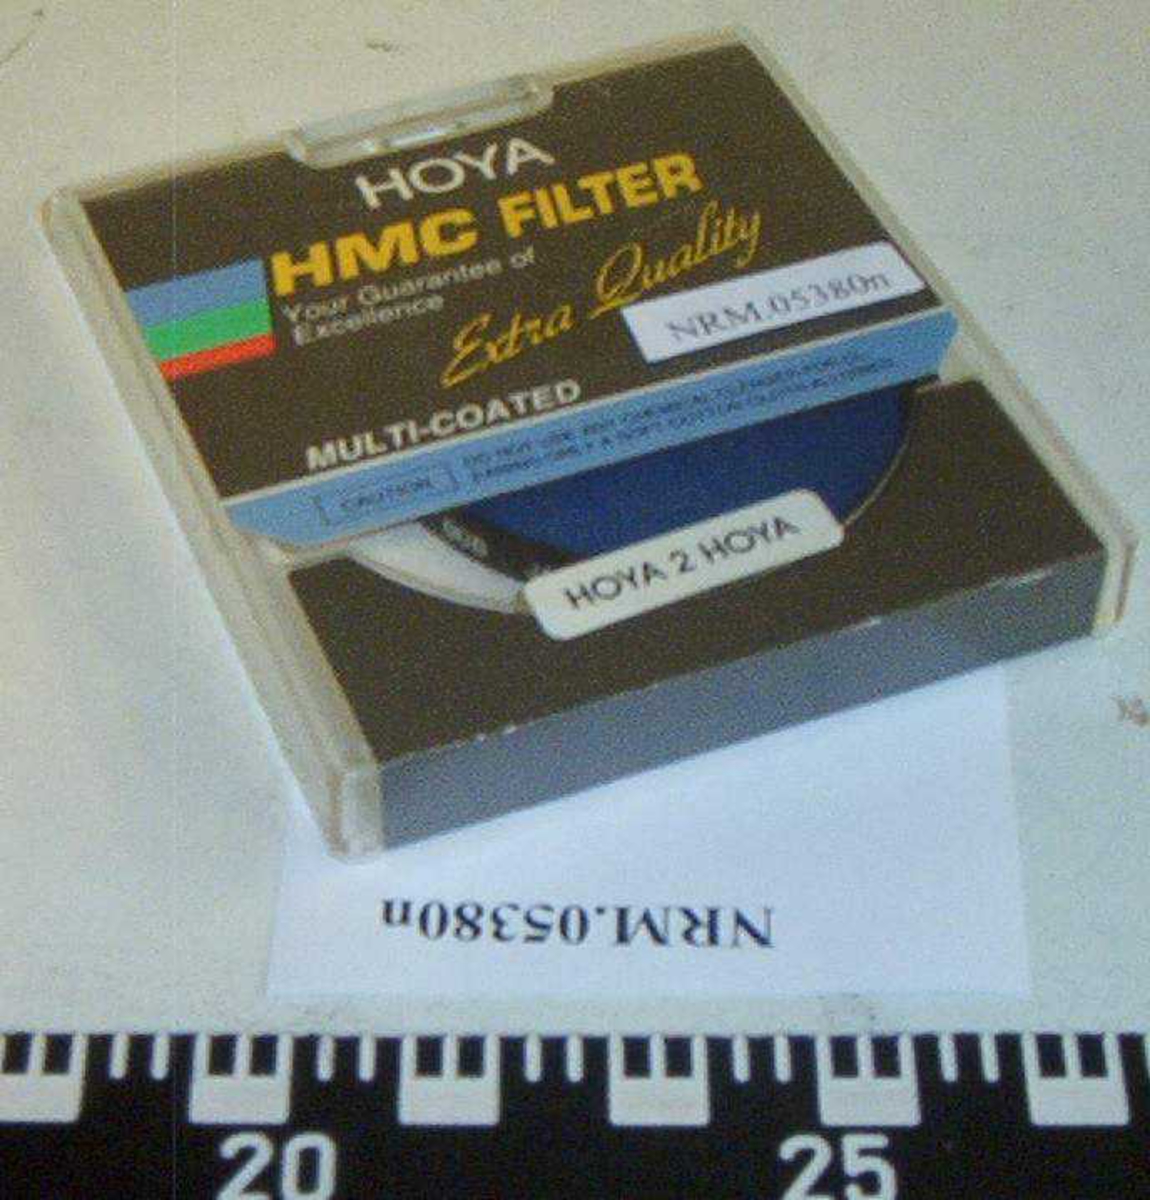 Diverse fotoutstyr, deler: (Oppevares i sort skai veske, merket Pollaroid - Uttrøndelag politikammer.)
NRM.05380a - 1 eske med 2 fargefilter: 1 rødt og 1 gult filter - Kodak
NRM.05380b - 1 eske med 1 sort fargefilter - Kodak
NRM.05380c - 1 eske med 2 plug adapters Sony PC 20A: 1 rød 
                        og 1 hvit
NRM.05380d - 1 eske med 1 hvit plug adapters Sony PC 20A
NRM.05380e - 1 plasteske med blått lysfilter Hoya 2 Hoya, 80B
NRM.05380f  - 1 plasteske med blått lysfilter Cokin
NRM.05380g - 1 eske med Sunpak, Electric Flash Accessory, 
                         Spiral Synchro Cord - 50sm/2'
NRM.05380h - 1 eske med Sunpak, Electric Flash Accessory, 
                         Spiral Synchro Cord - 50cm/2'
NRM.05380i  - 1 White/Silver reflector pak 18 square feet (56"x18")
NRM.05380j  - 1 eske med 1 Wide Angle Attachment V-285
NRM.05380k - 1 eske med 1 sølvplate
NRM.05380l  - 1 Monolta RC 1000 med ledning
NRM.05380m - 1 Hitachi Remote Controller VY-RM 100A med ledning
NRM.05380n - 1 plasteske med 1 blått lysfilter Hoya HMC Filter
